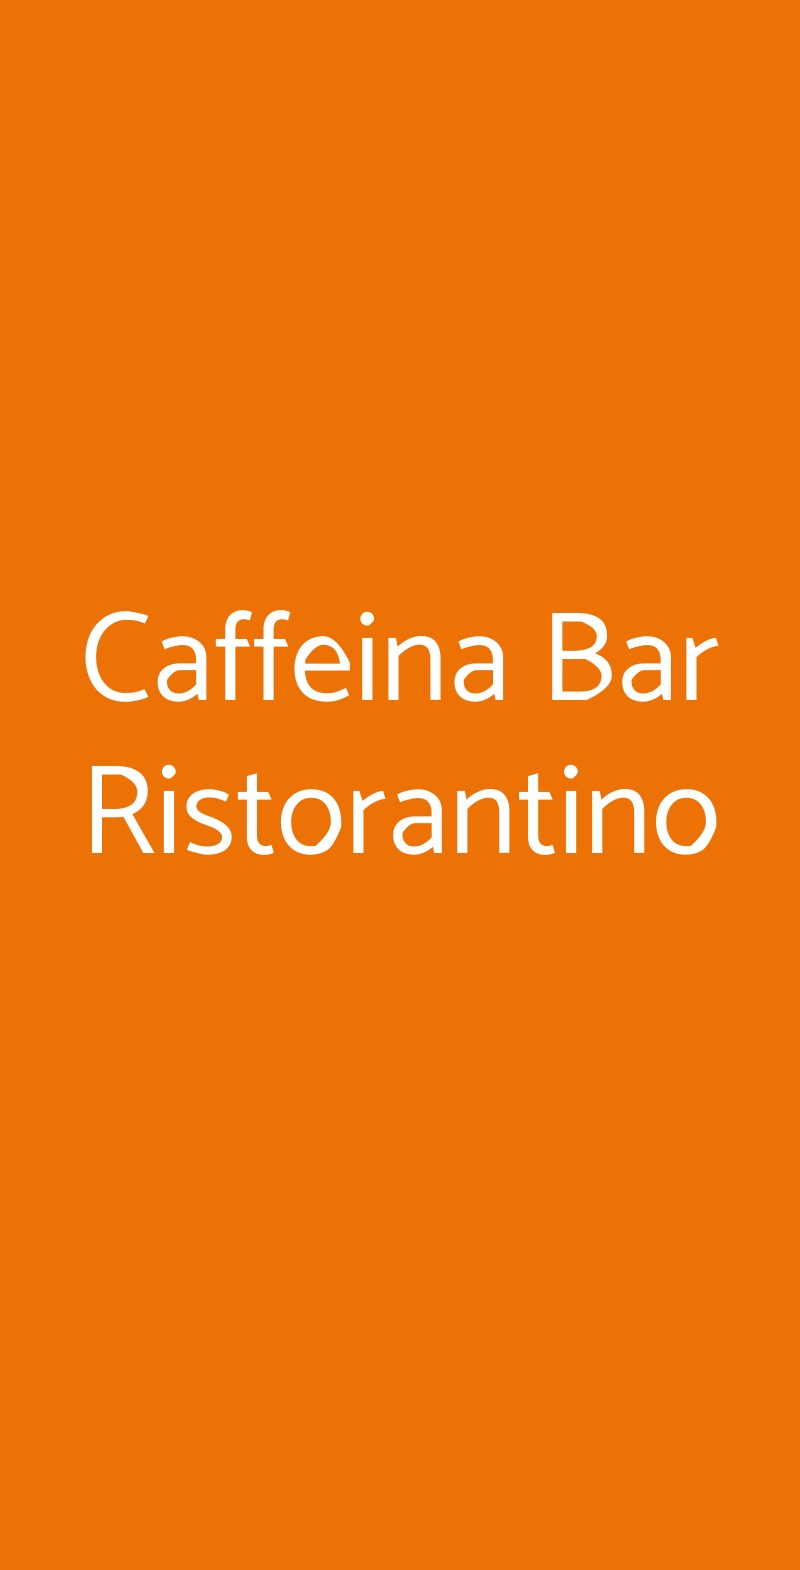 Caffeina Bar Ristorantino Pesaro menù 1 pagina